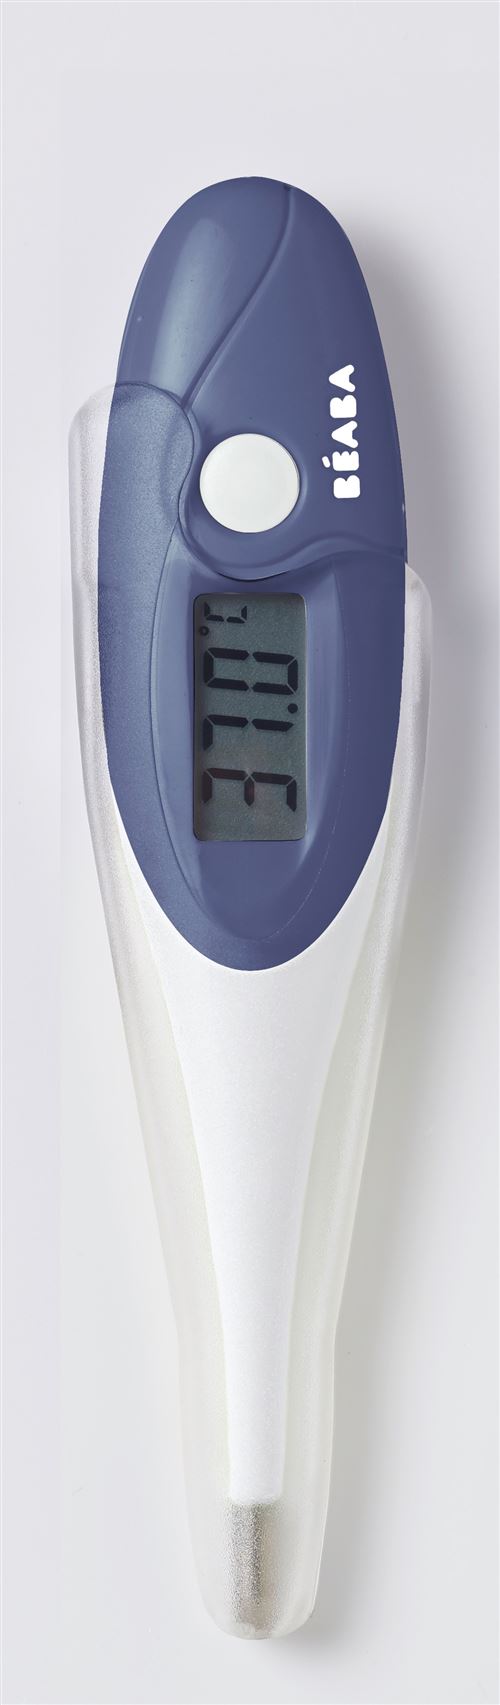 Thermomètre Thermobip de Béaba